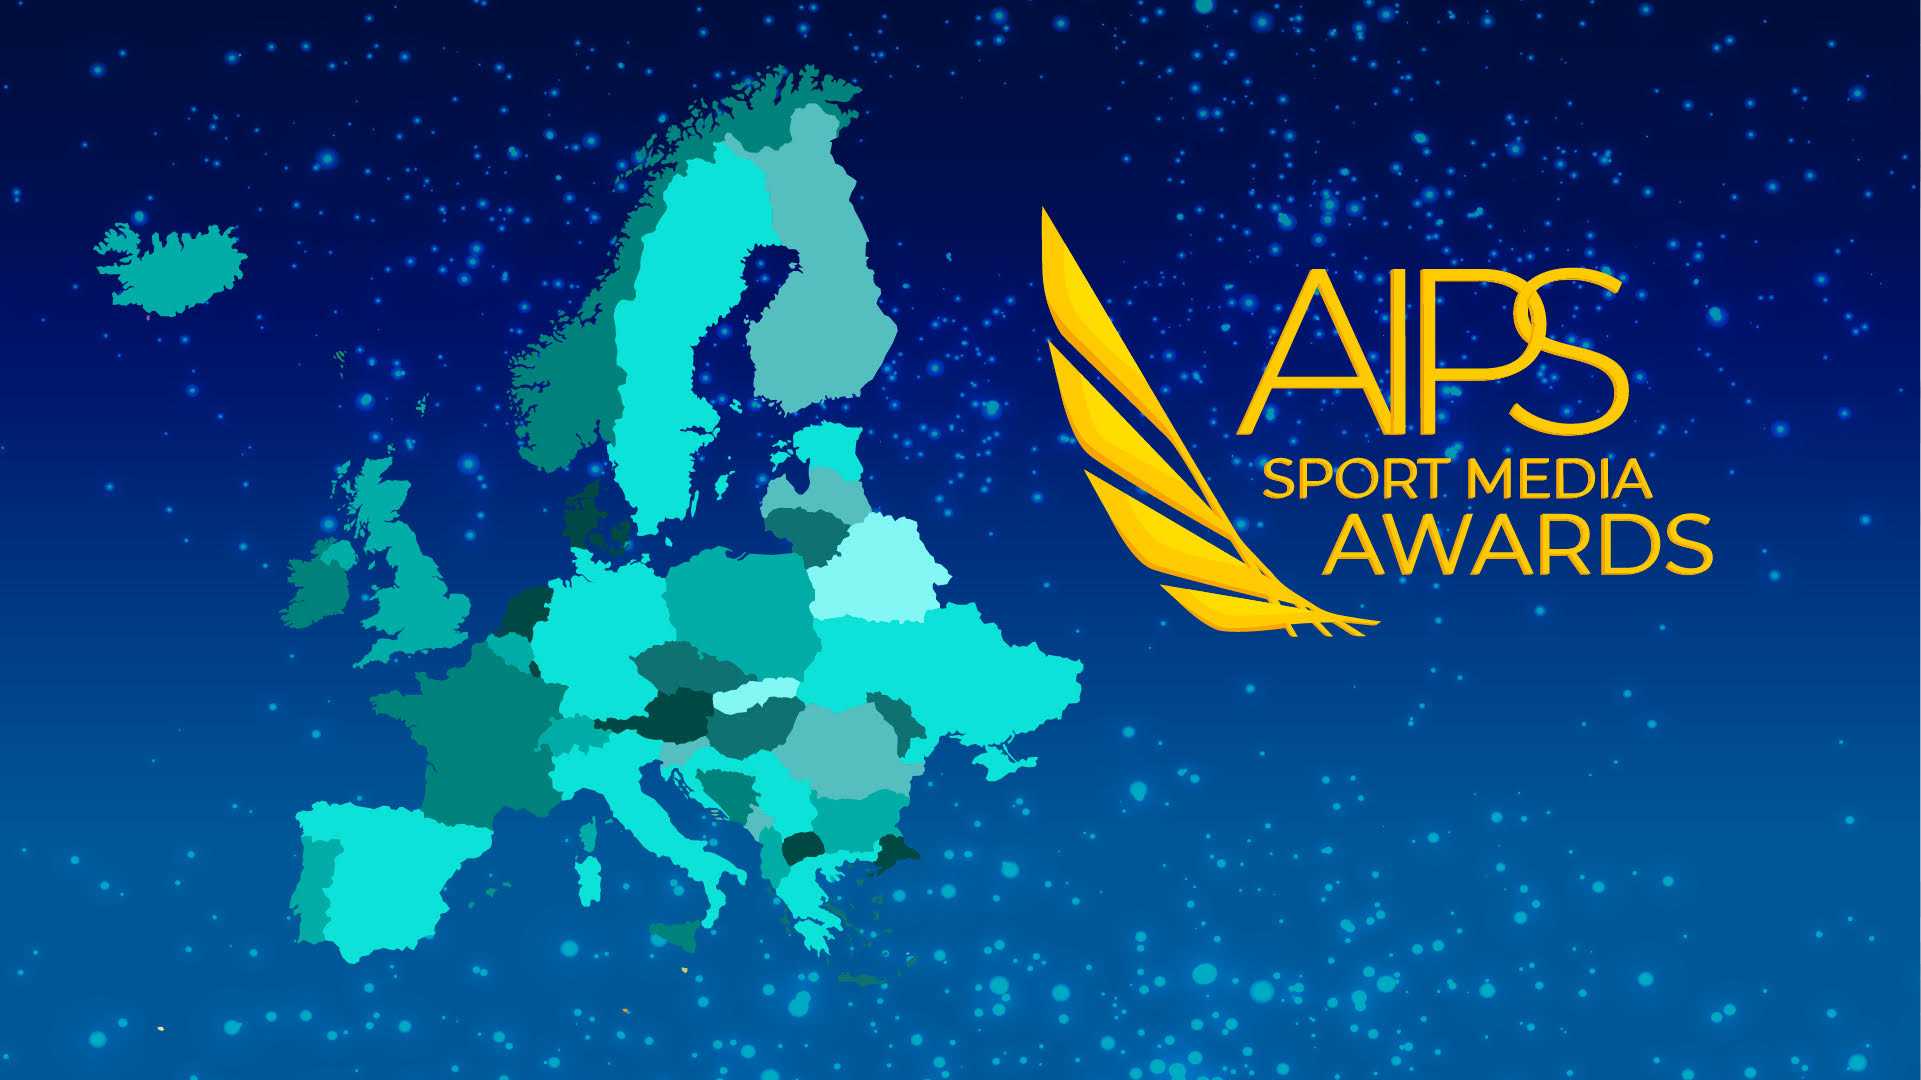 AIPS award 19 Europe